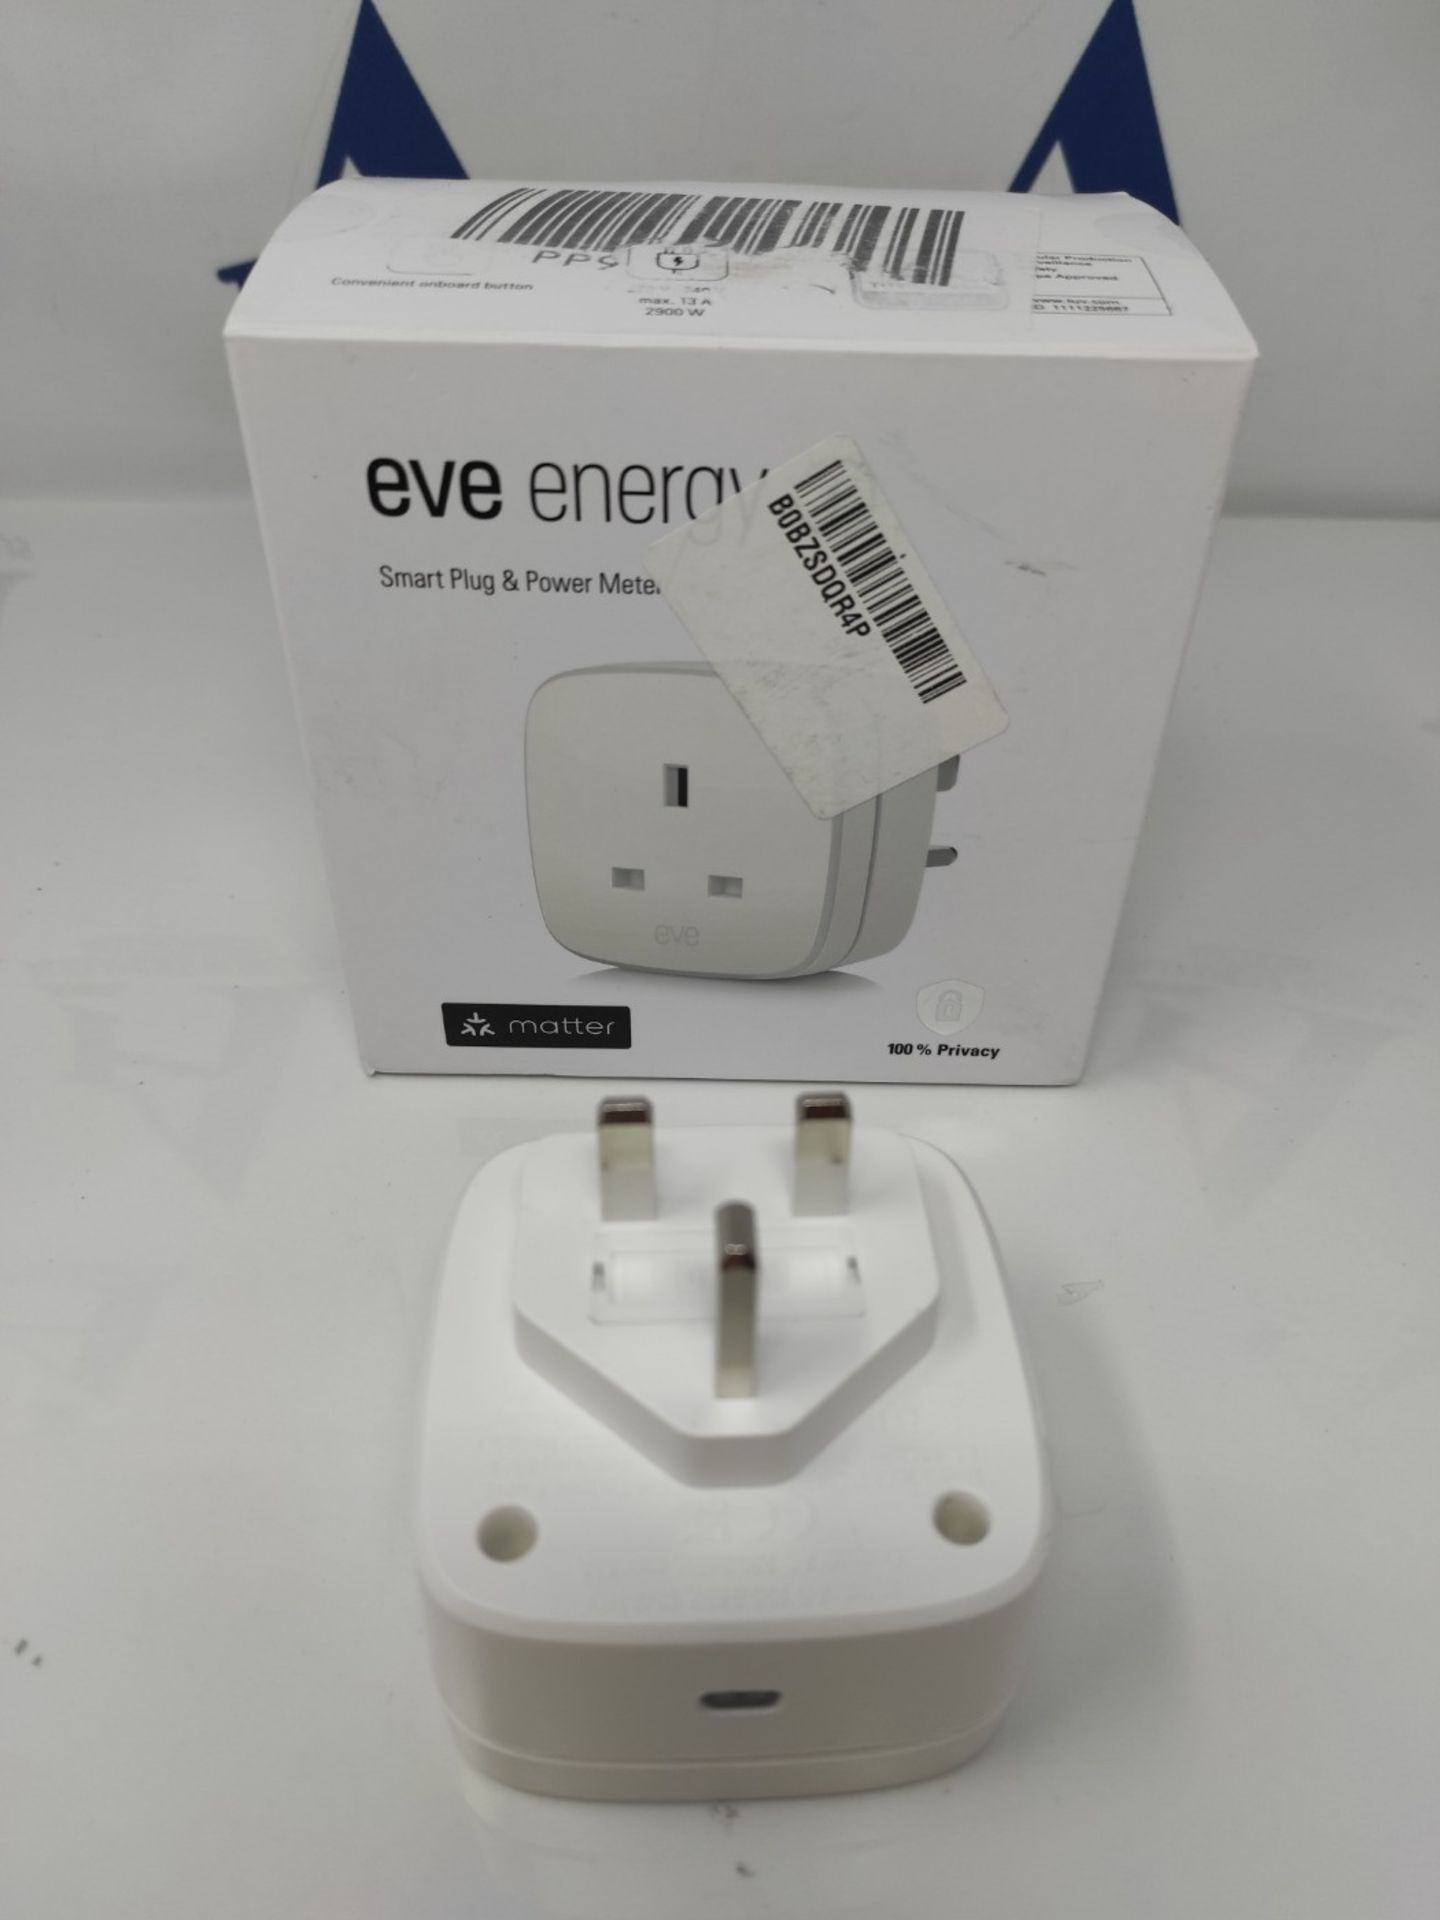 Eve Energy (Matter) UK - Smart Plug, Control & Automate Lights / Appliances, Secure & - Image 2 of 2